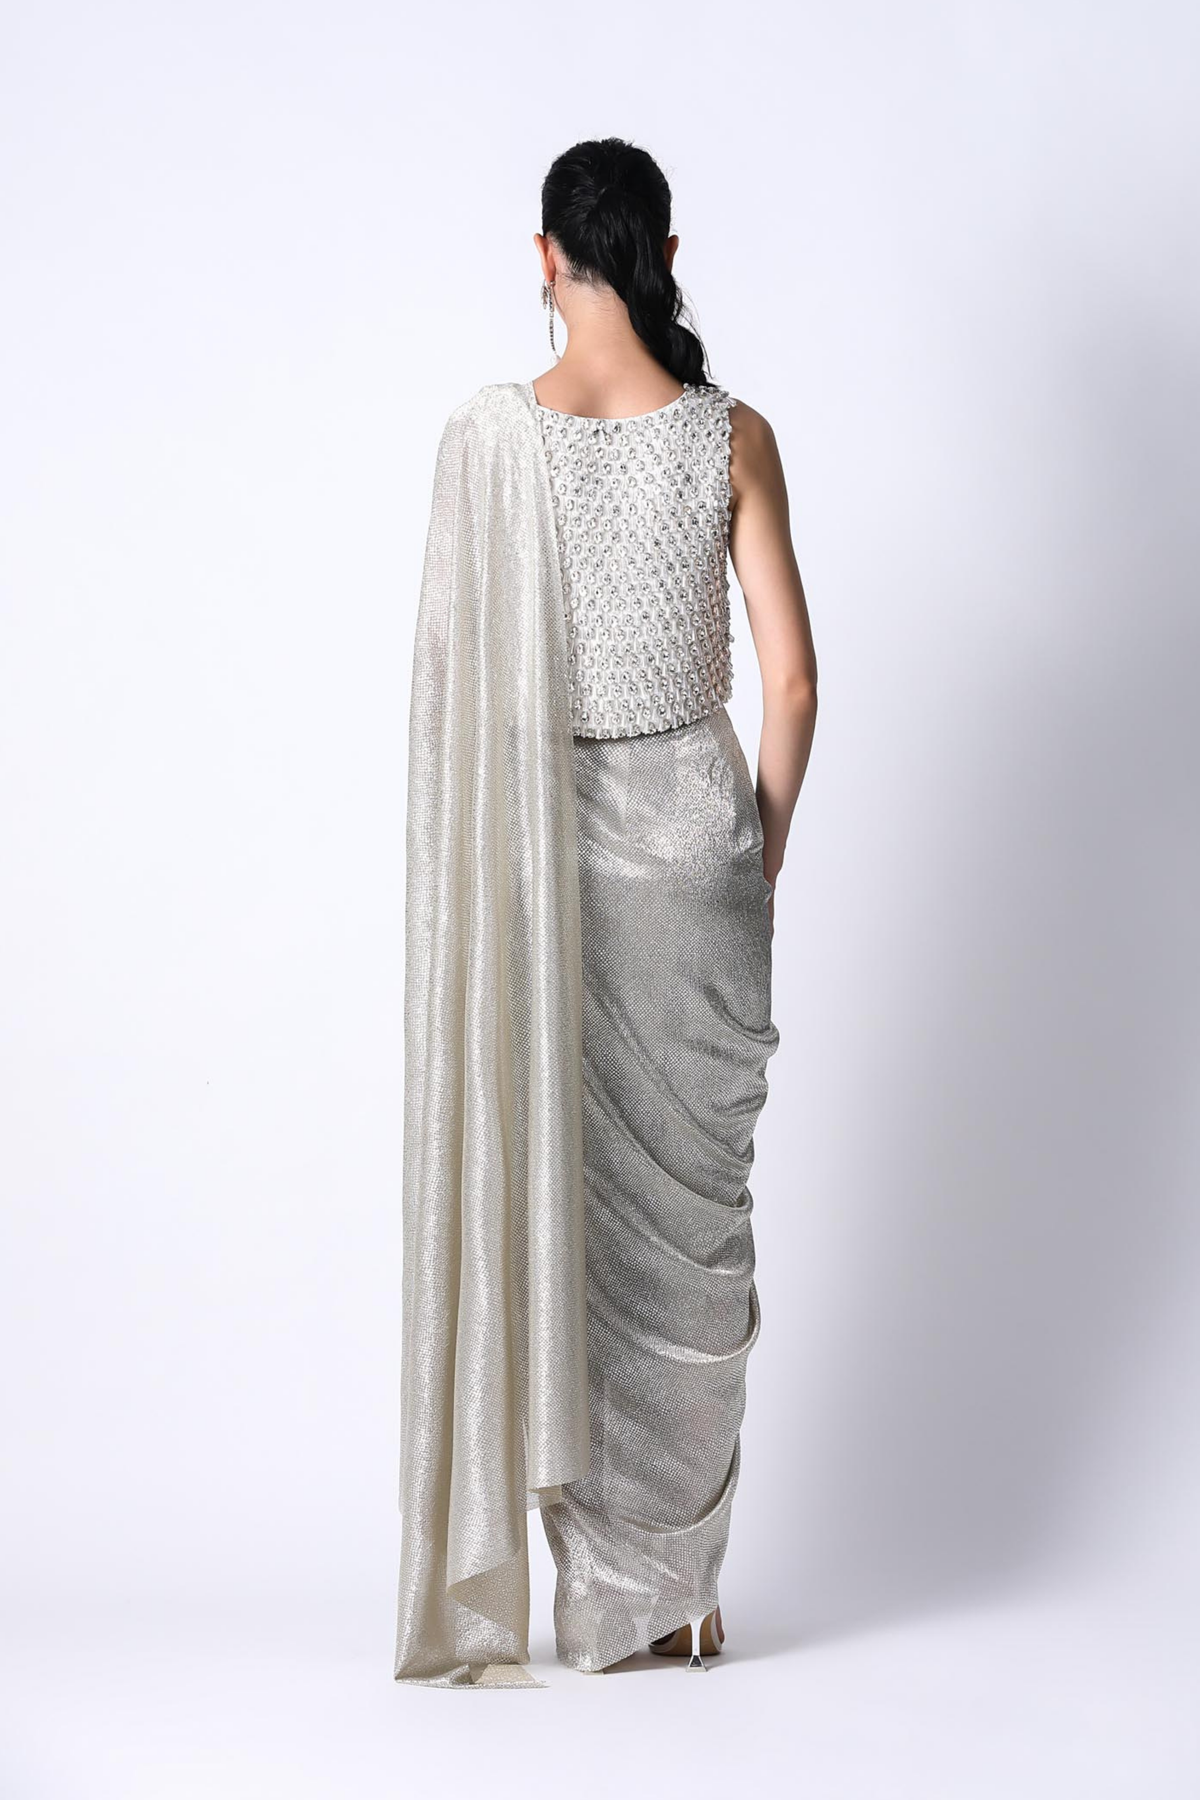 Chandelier Top With Galaxy Sari